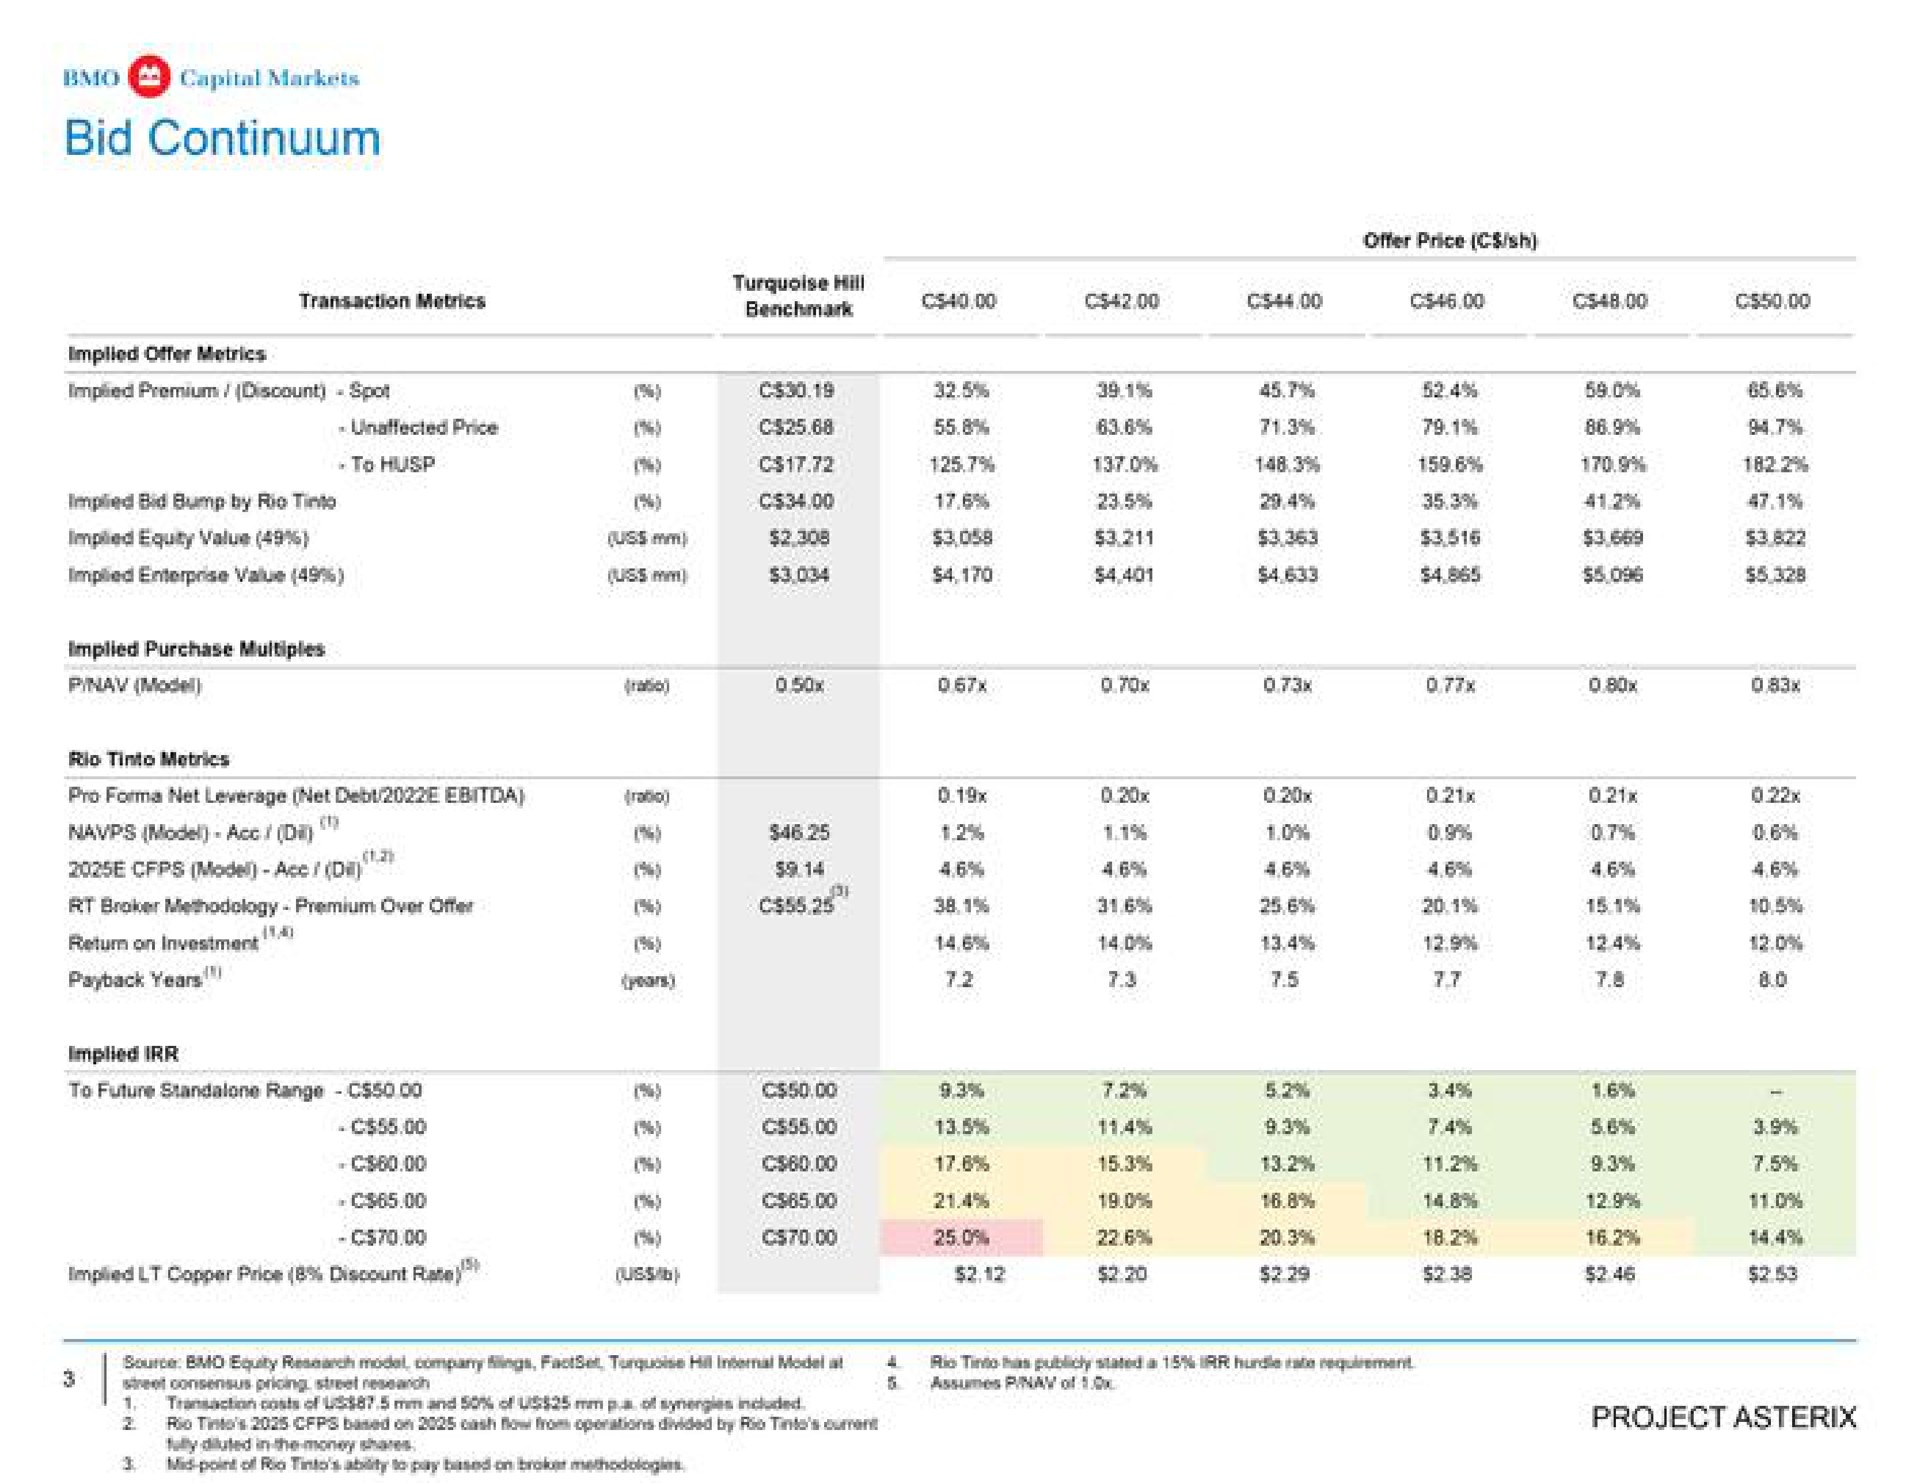 bid continuum model broker premium to future range a | BMO Capital Markets